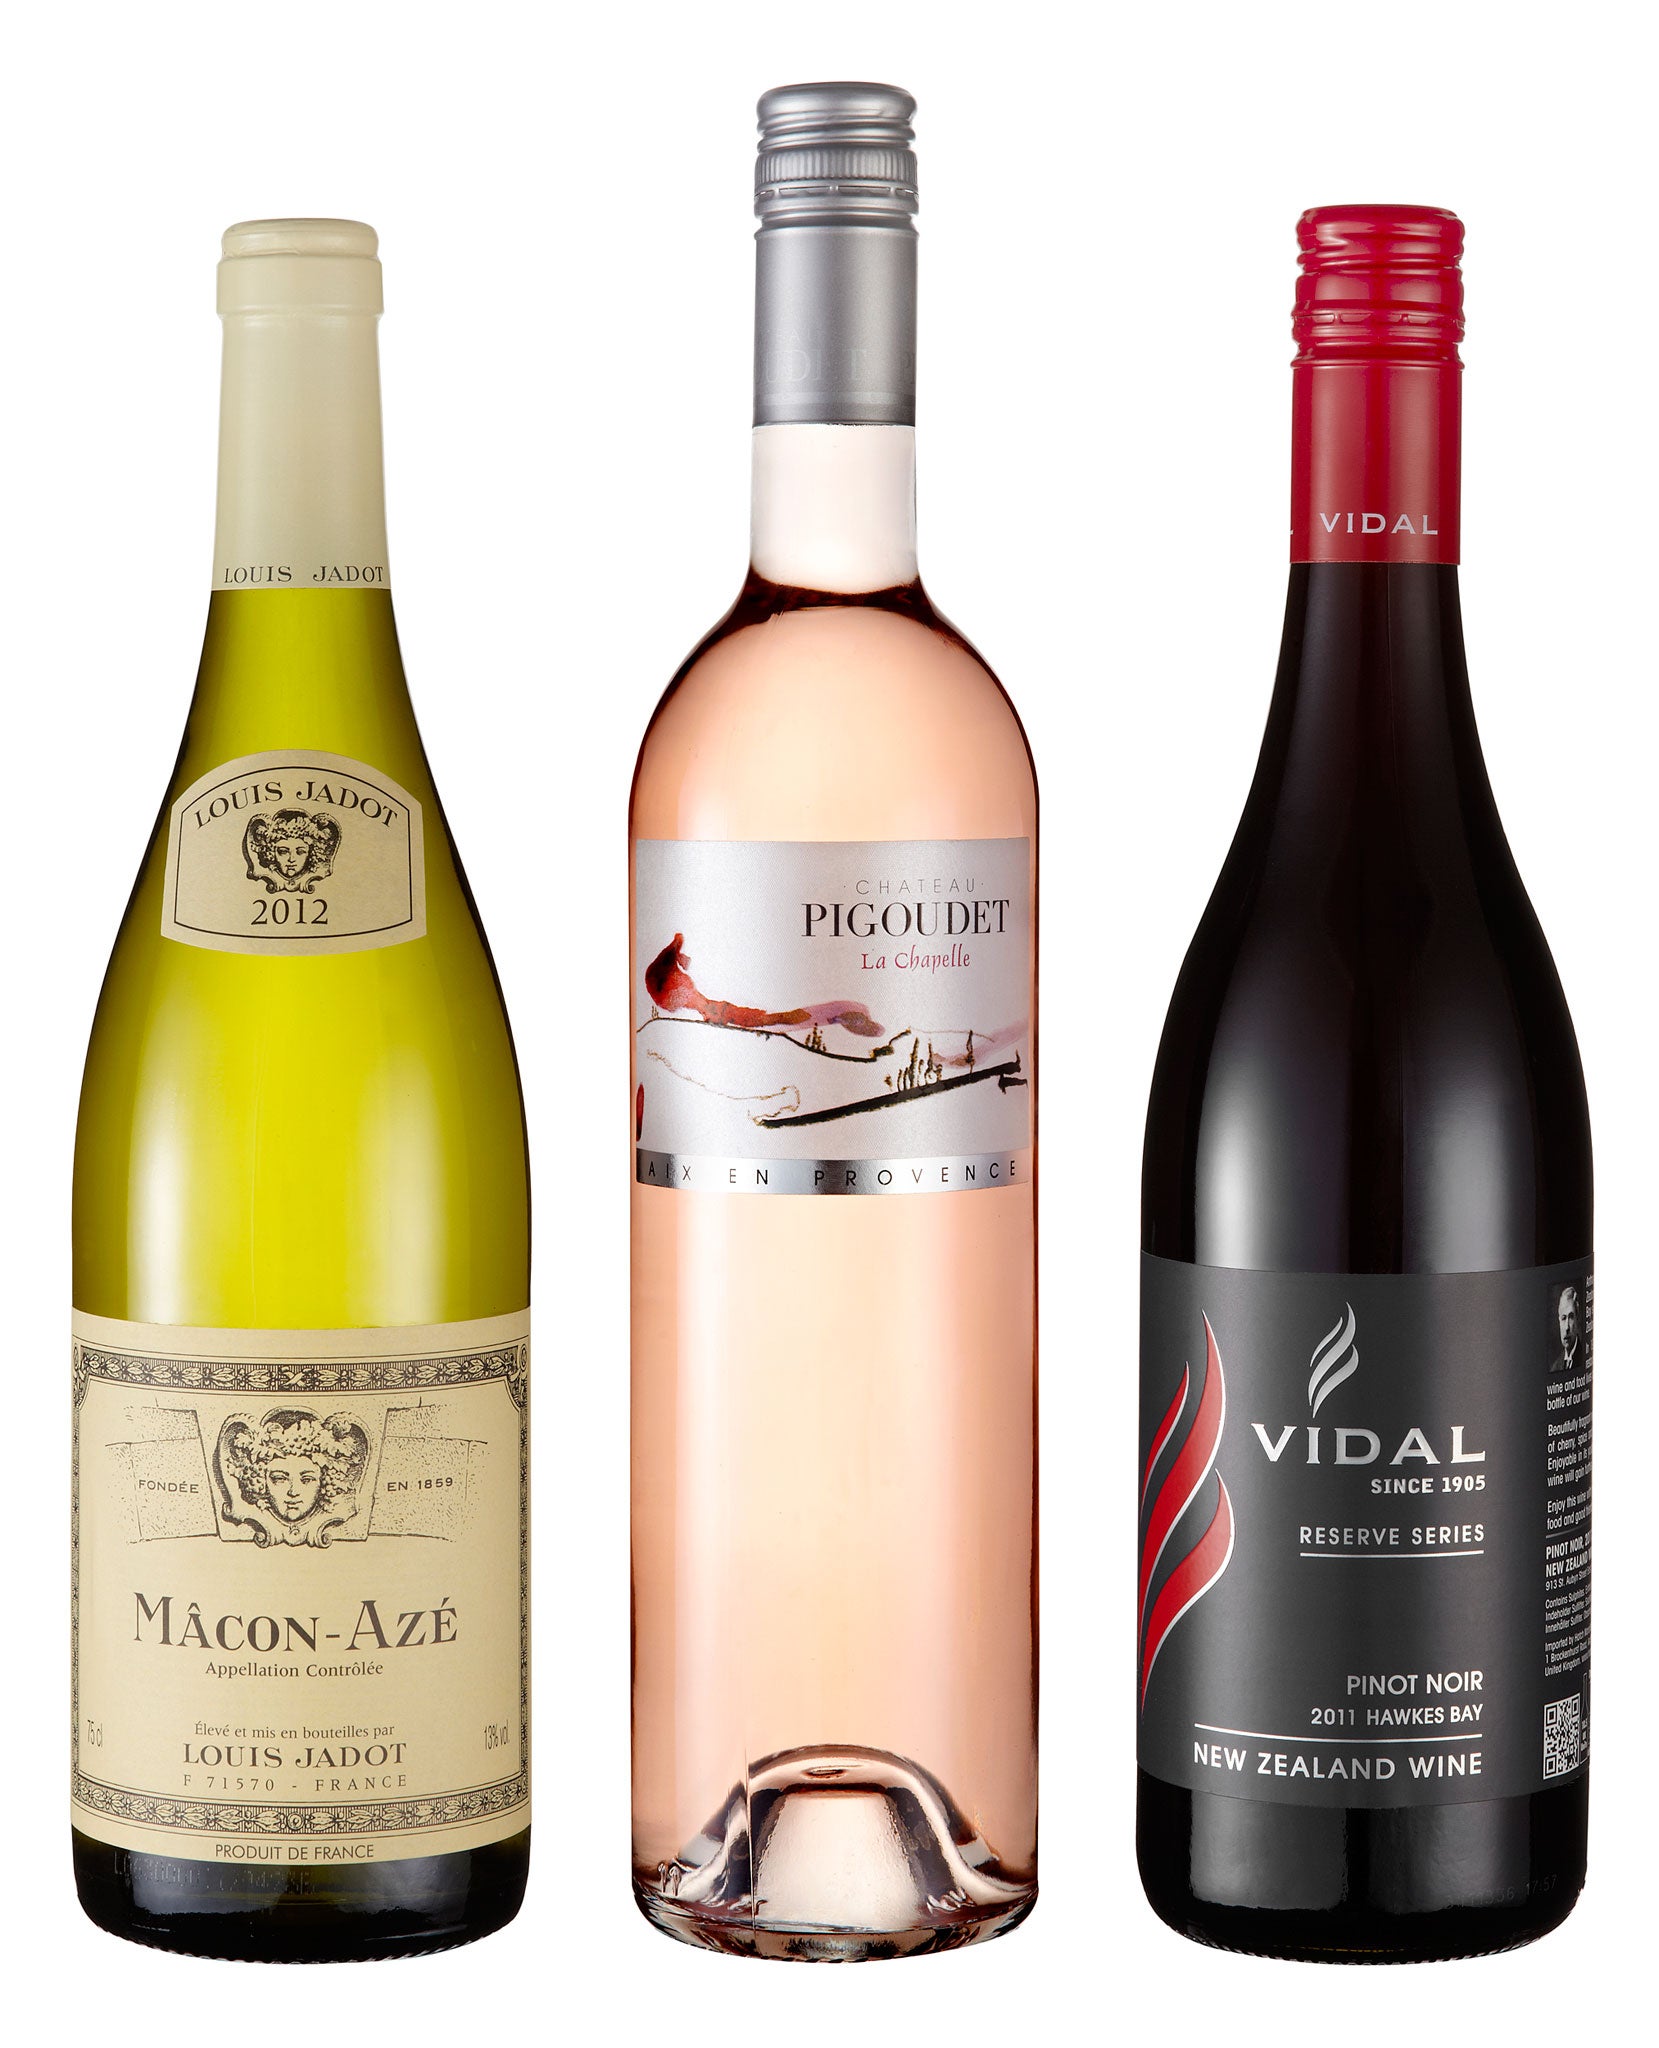 Louis Jadot Macon-Aze 2012; Chateau Pigoudet 'La Chapelle' 2012; Vidal Reserve Series Pinot Noir Hawkes Bay 2011